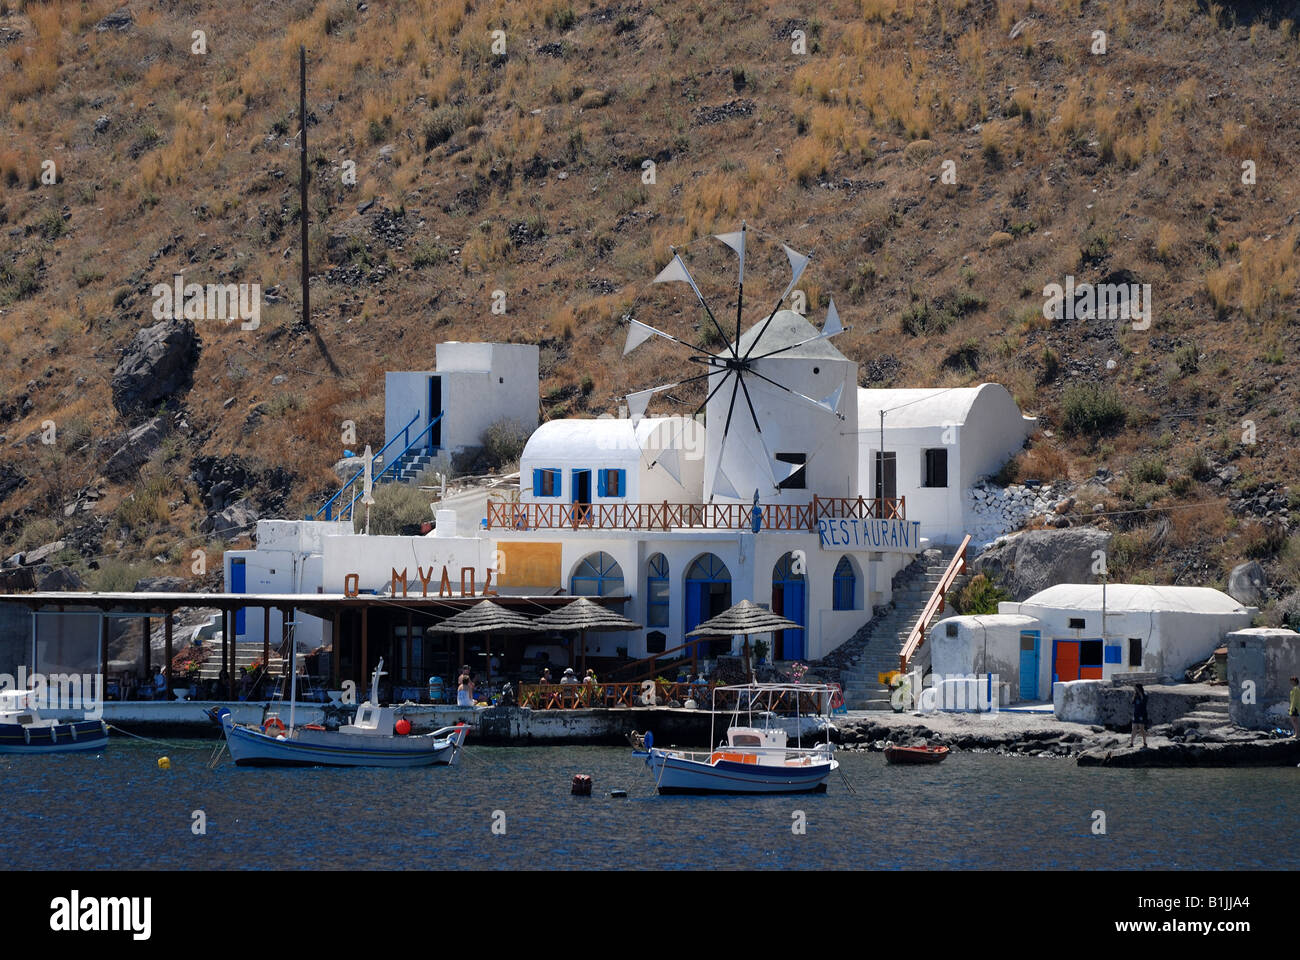 Restaurant on the island Thirassia near Santorini, Greece Stock Photo